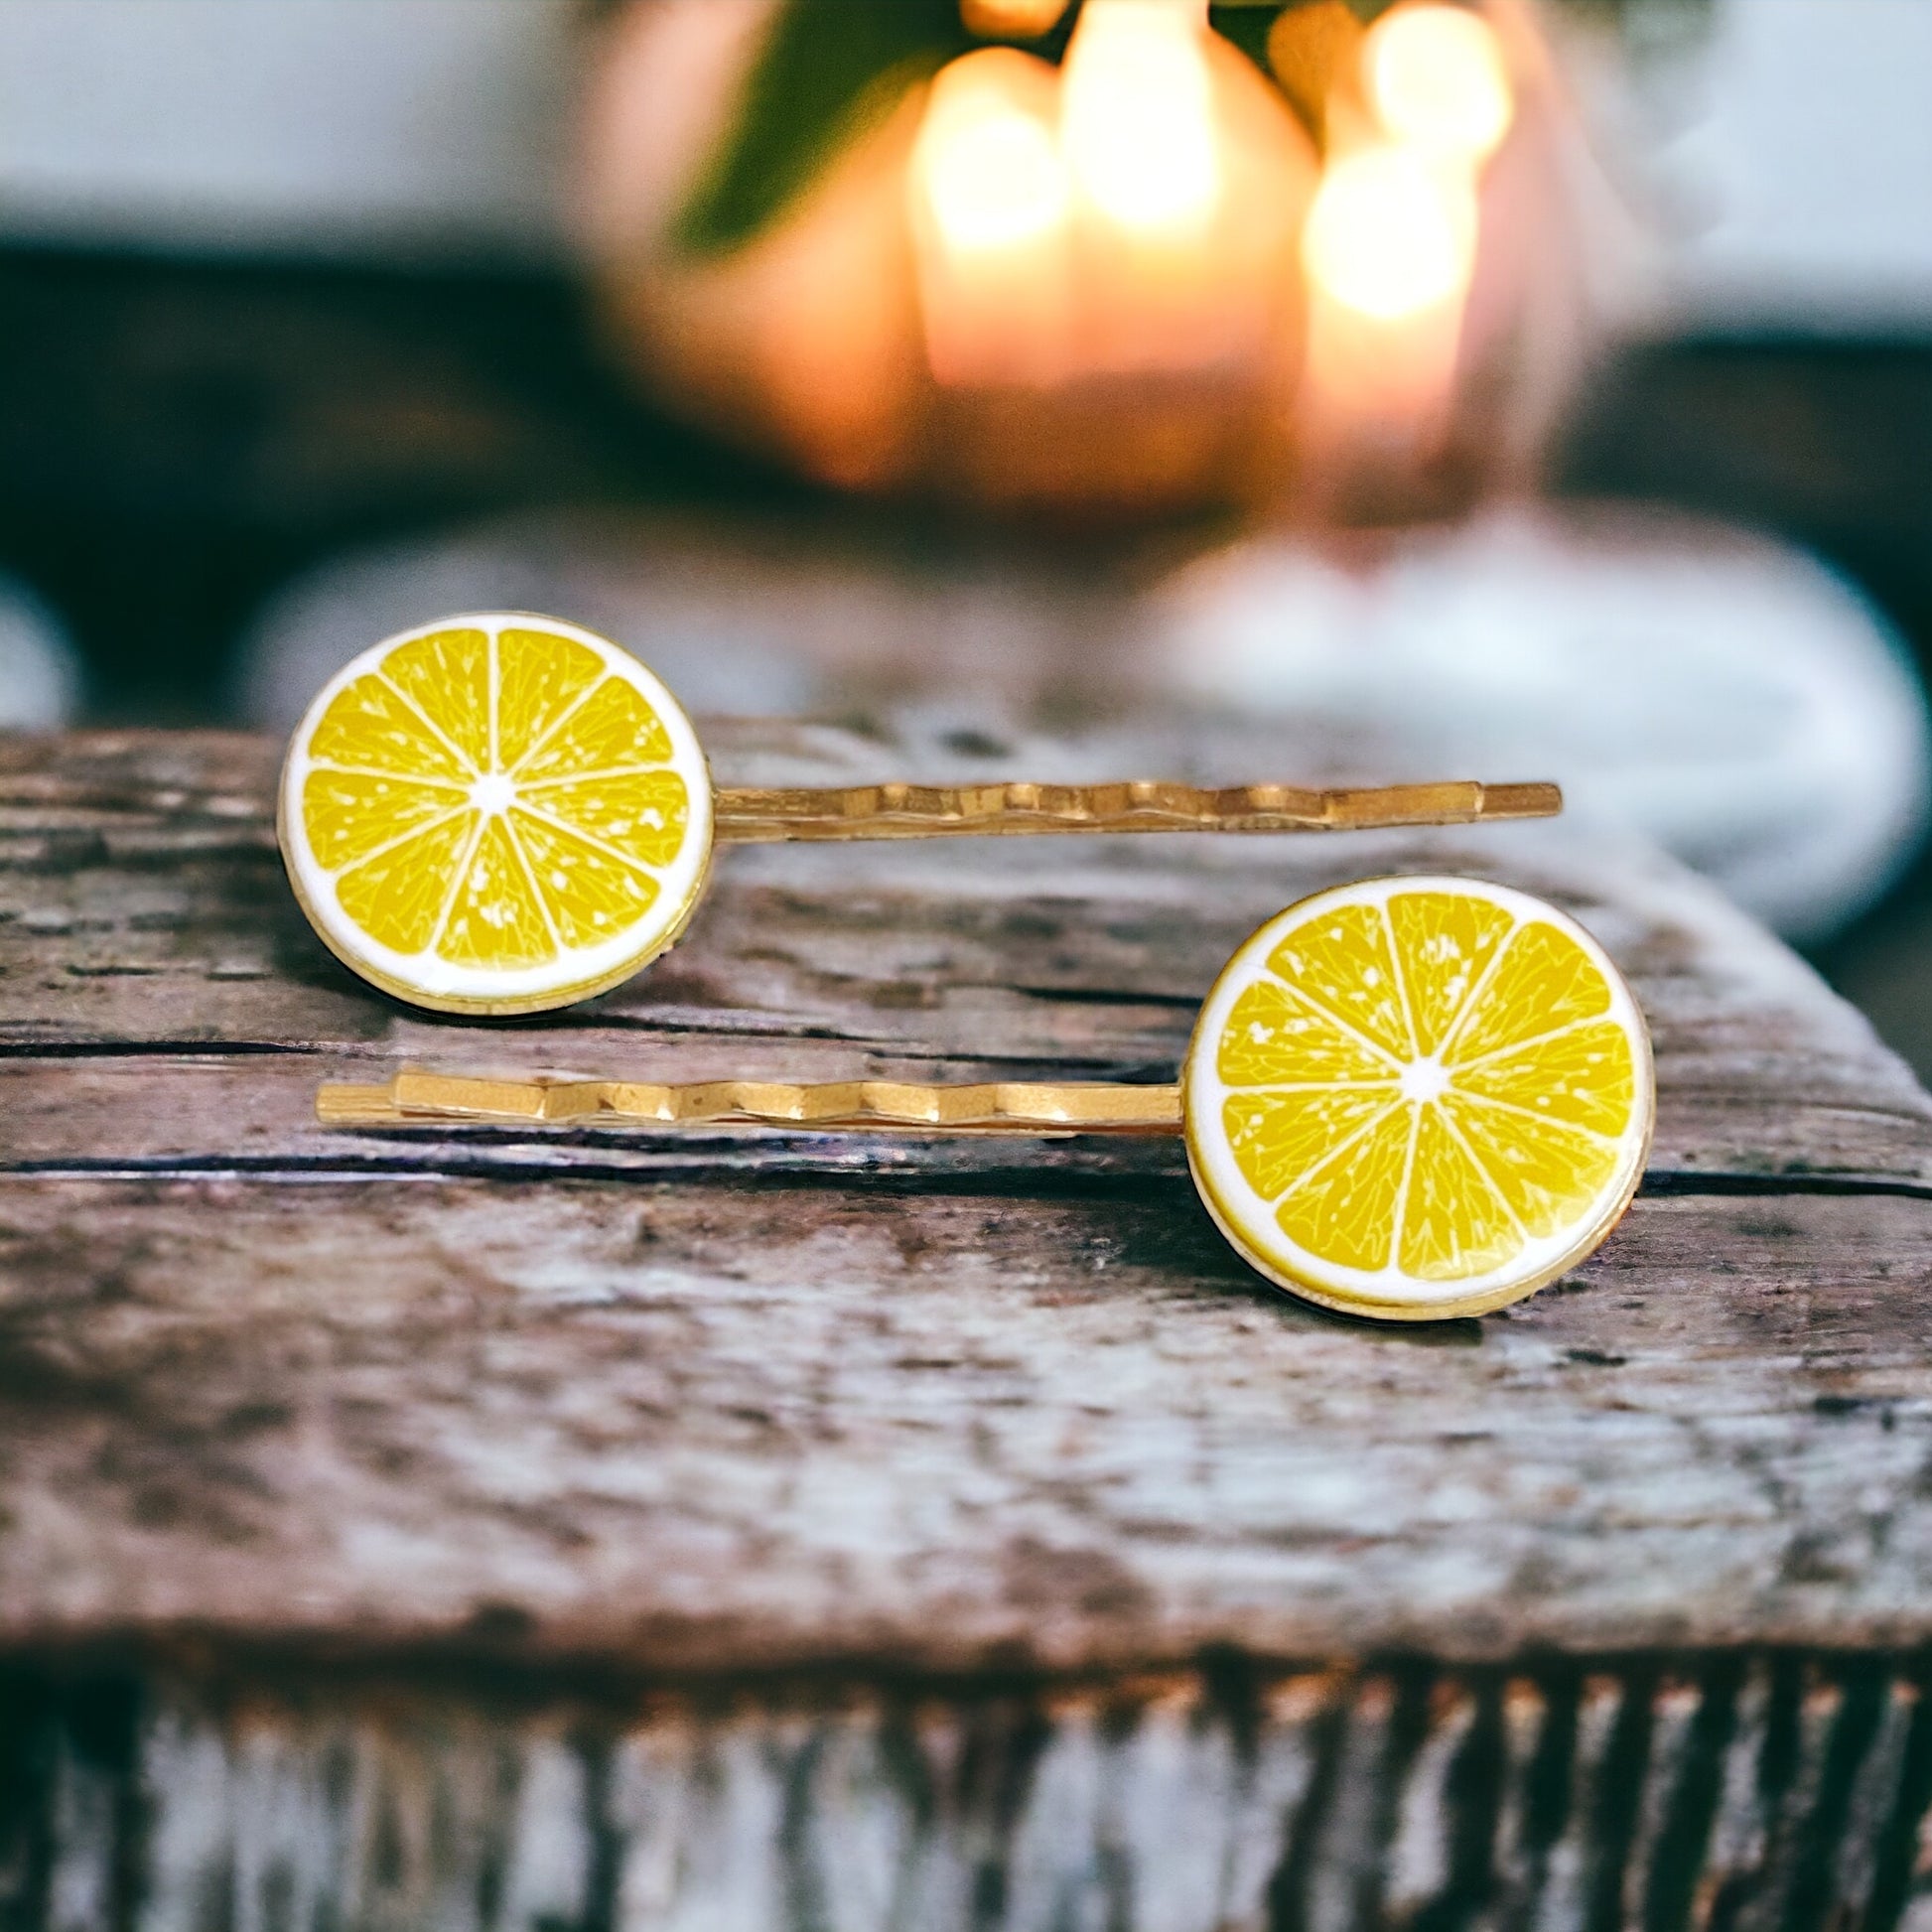 Enamel Lemon Bobby Pins: Sweet Accessories for Fun & Flirty Hairstyles